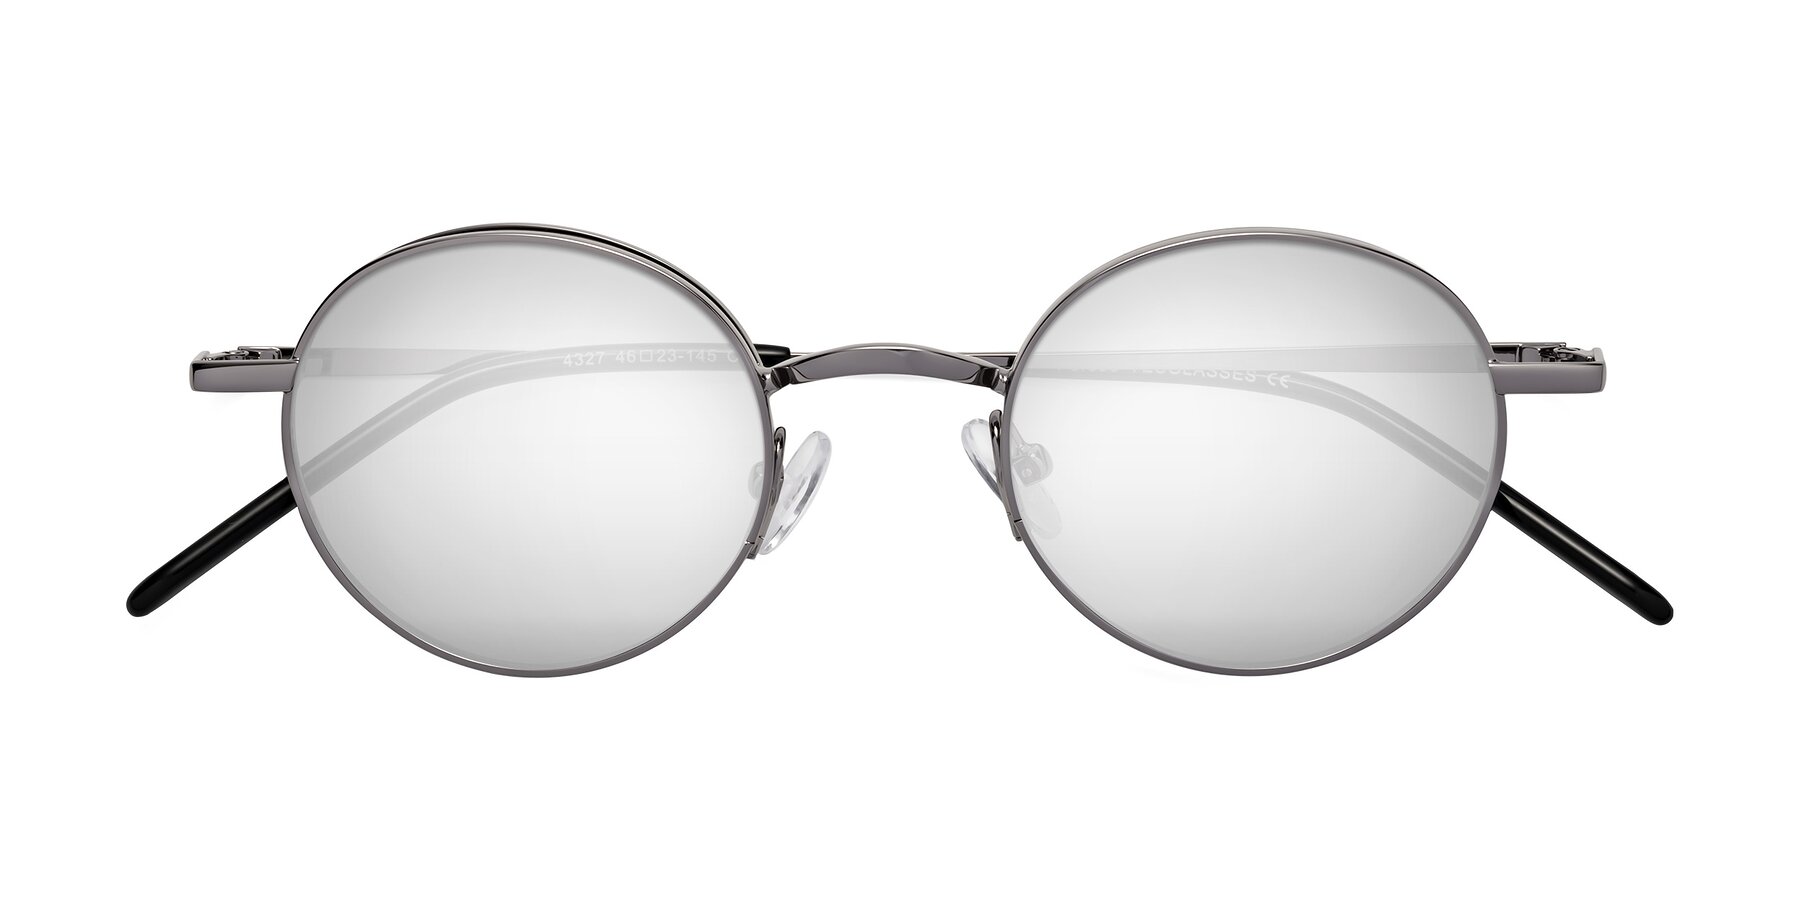 Round silver sunglasses silver mirrored lenses